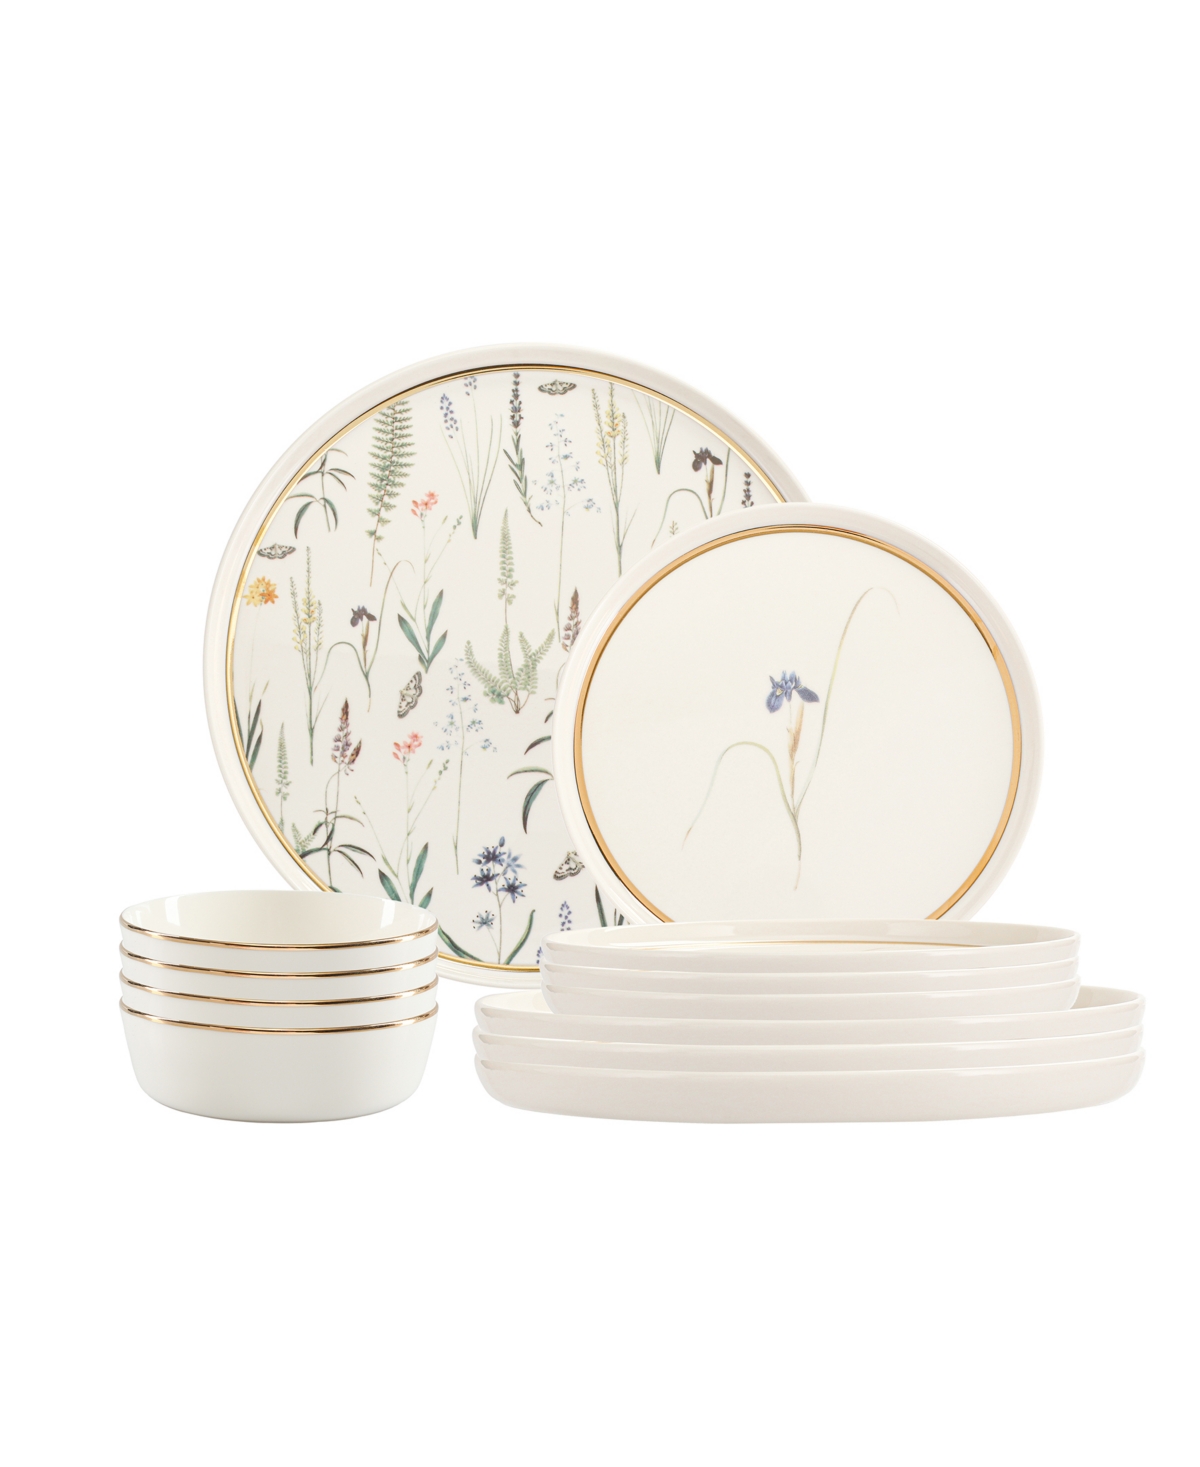 Botanical 12 Piece Dinnerware Set, Service for 4 - White, Gold